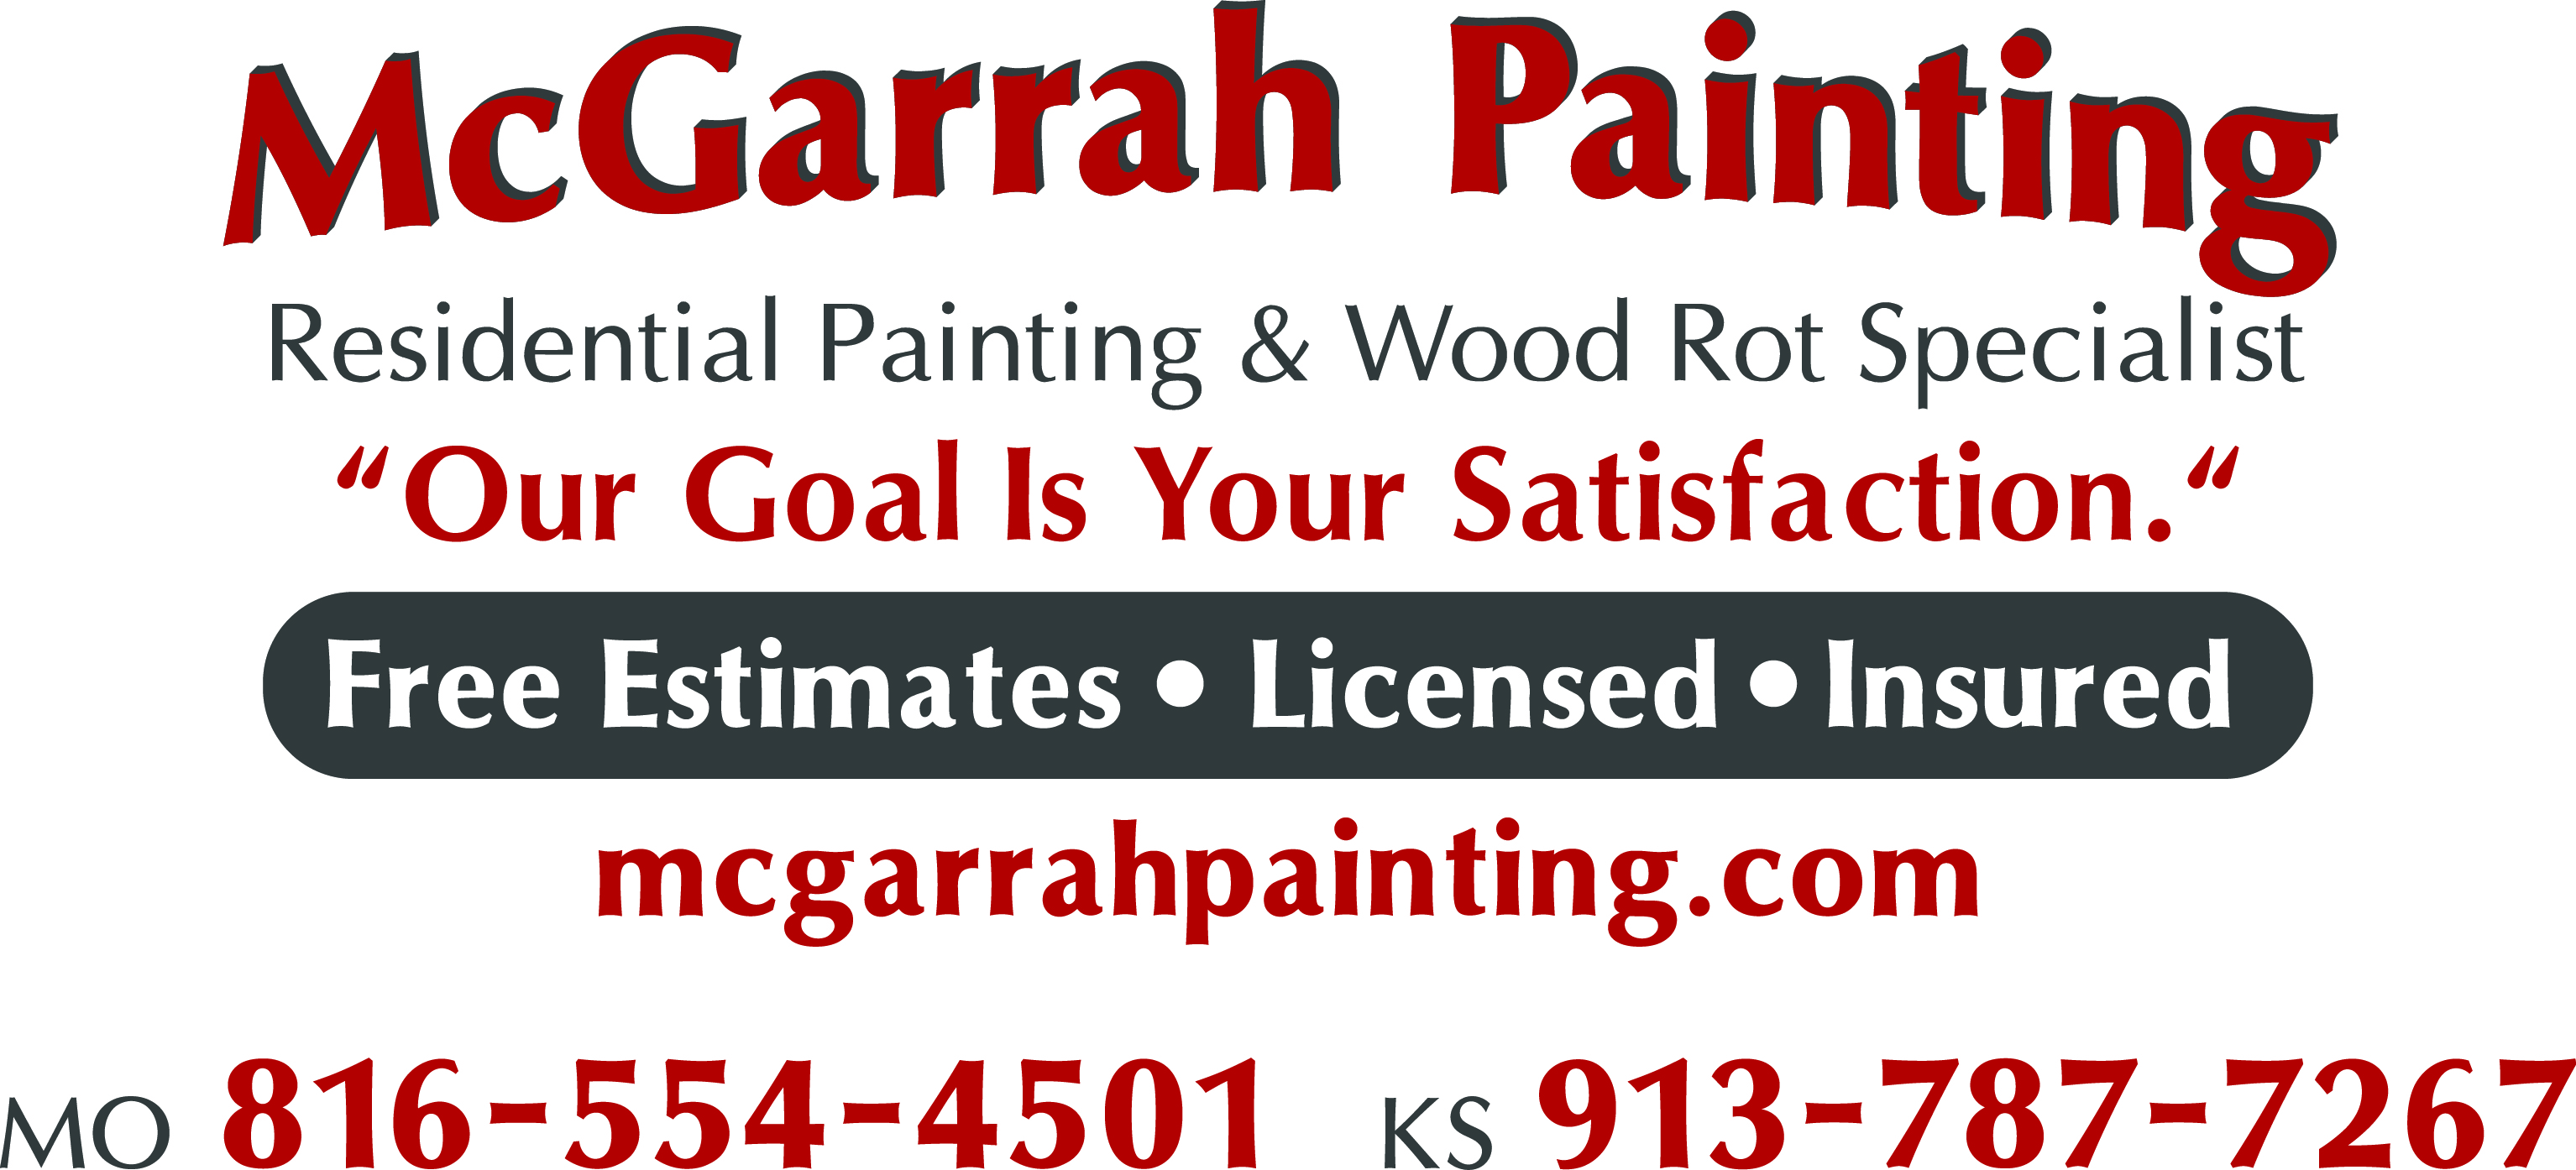 Dwight McGarrah Painting and Wallpaper, LLC Logo